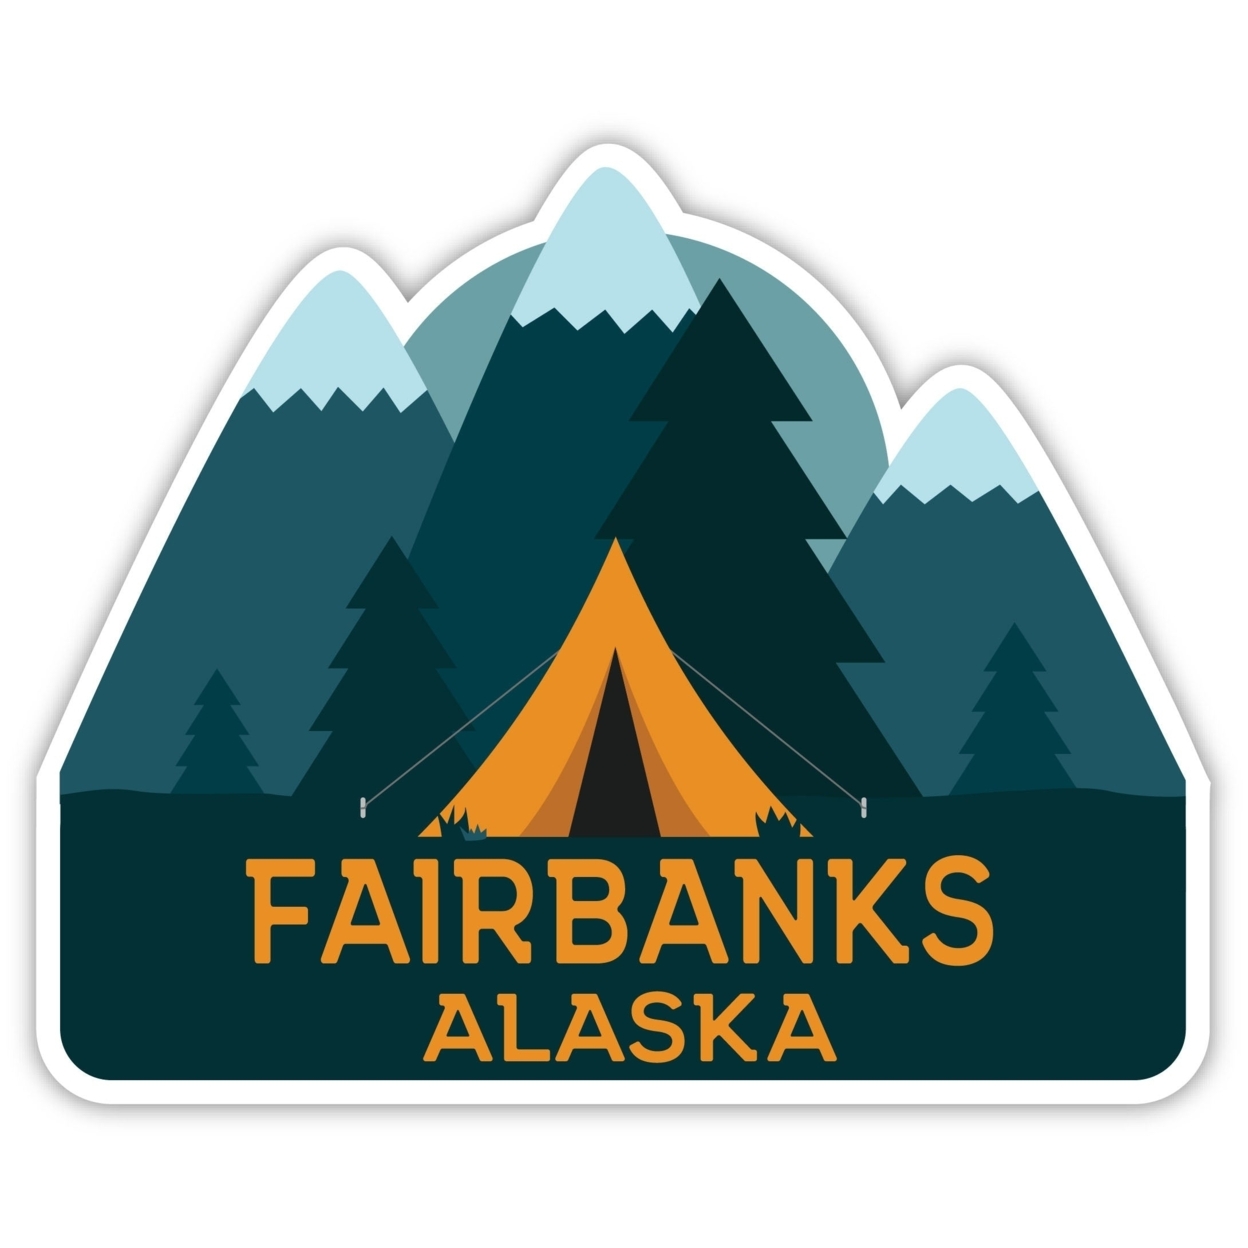 Fairbanks Alaska Souvenir Decorative Stickers (Choose Theme And Size) - 4-Pack, 2-Inch, Tent